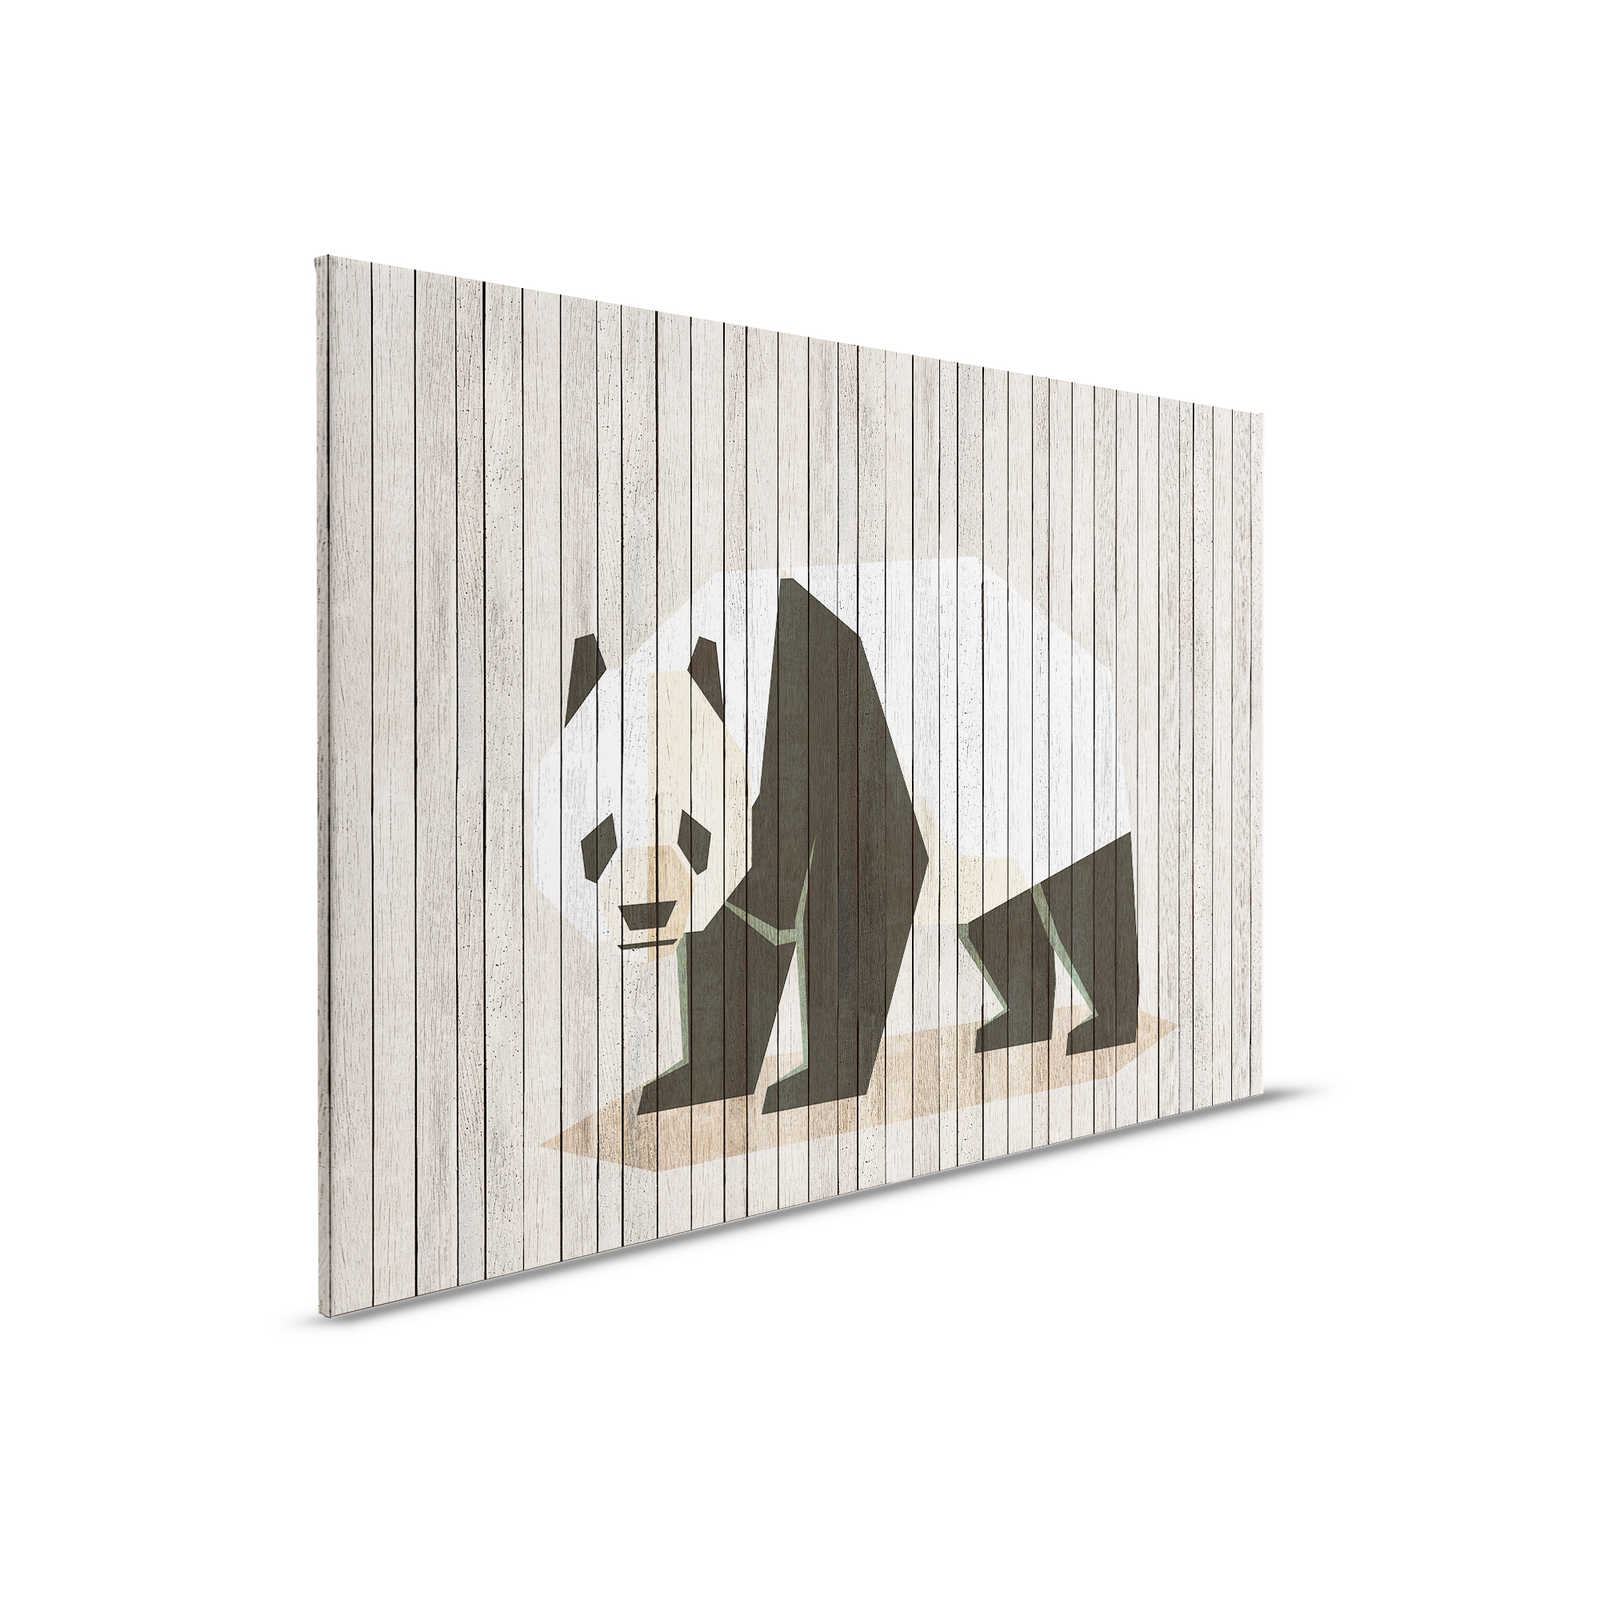         Born to Be Wild 2 - Leinwandbild auf Holzpaneele Struktur mit Panda & Bretterwand – 0,90 m x 0,60 m
    